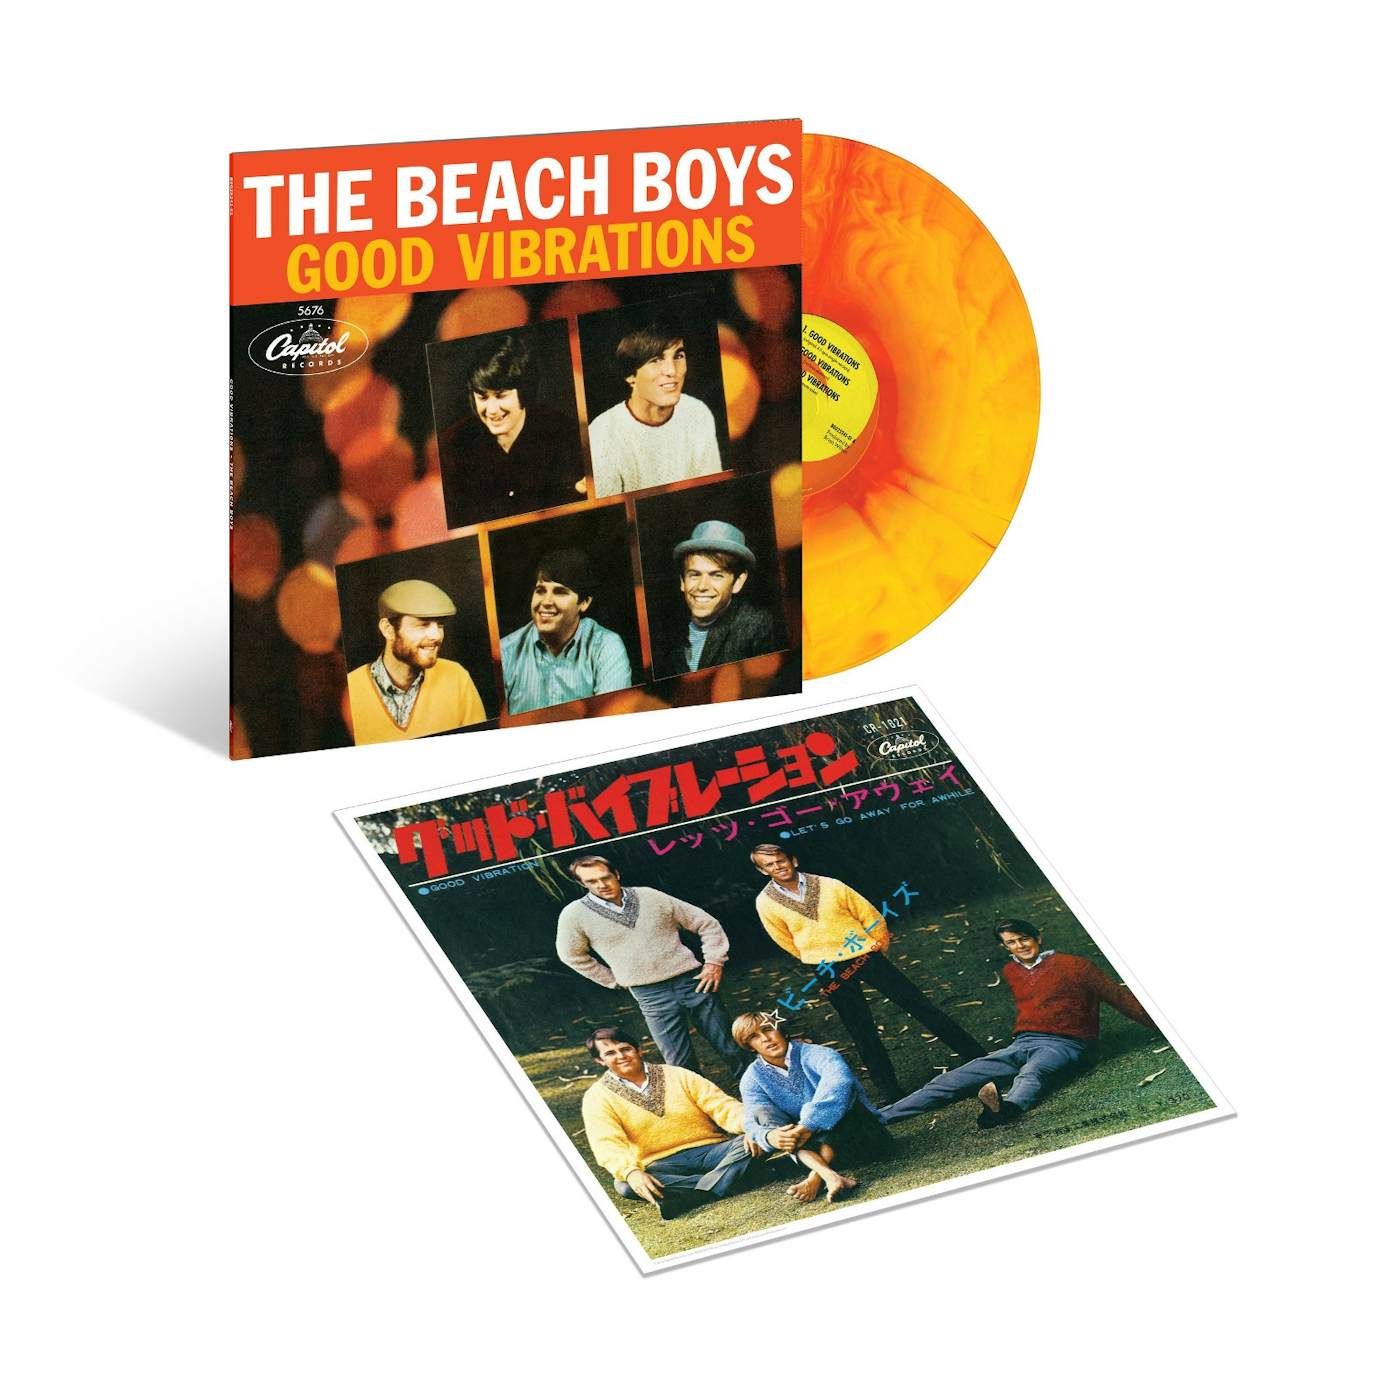 The Beach Boys GOOD VIBRATIONS 50TH ANNIVERSARY Vinyl Record